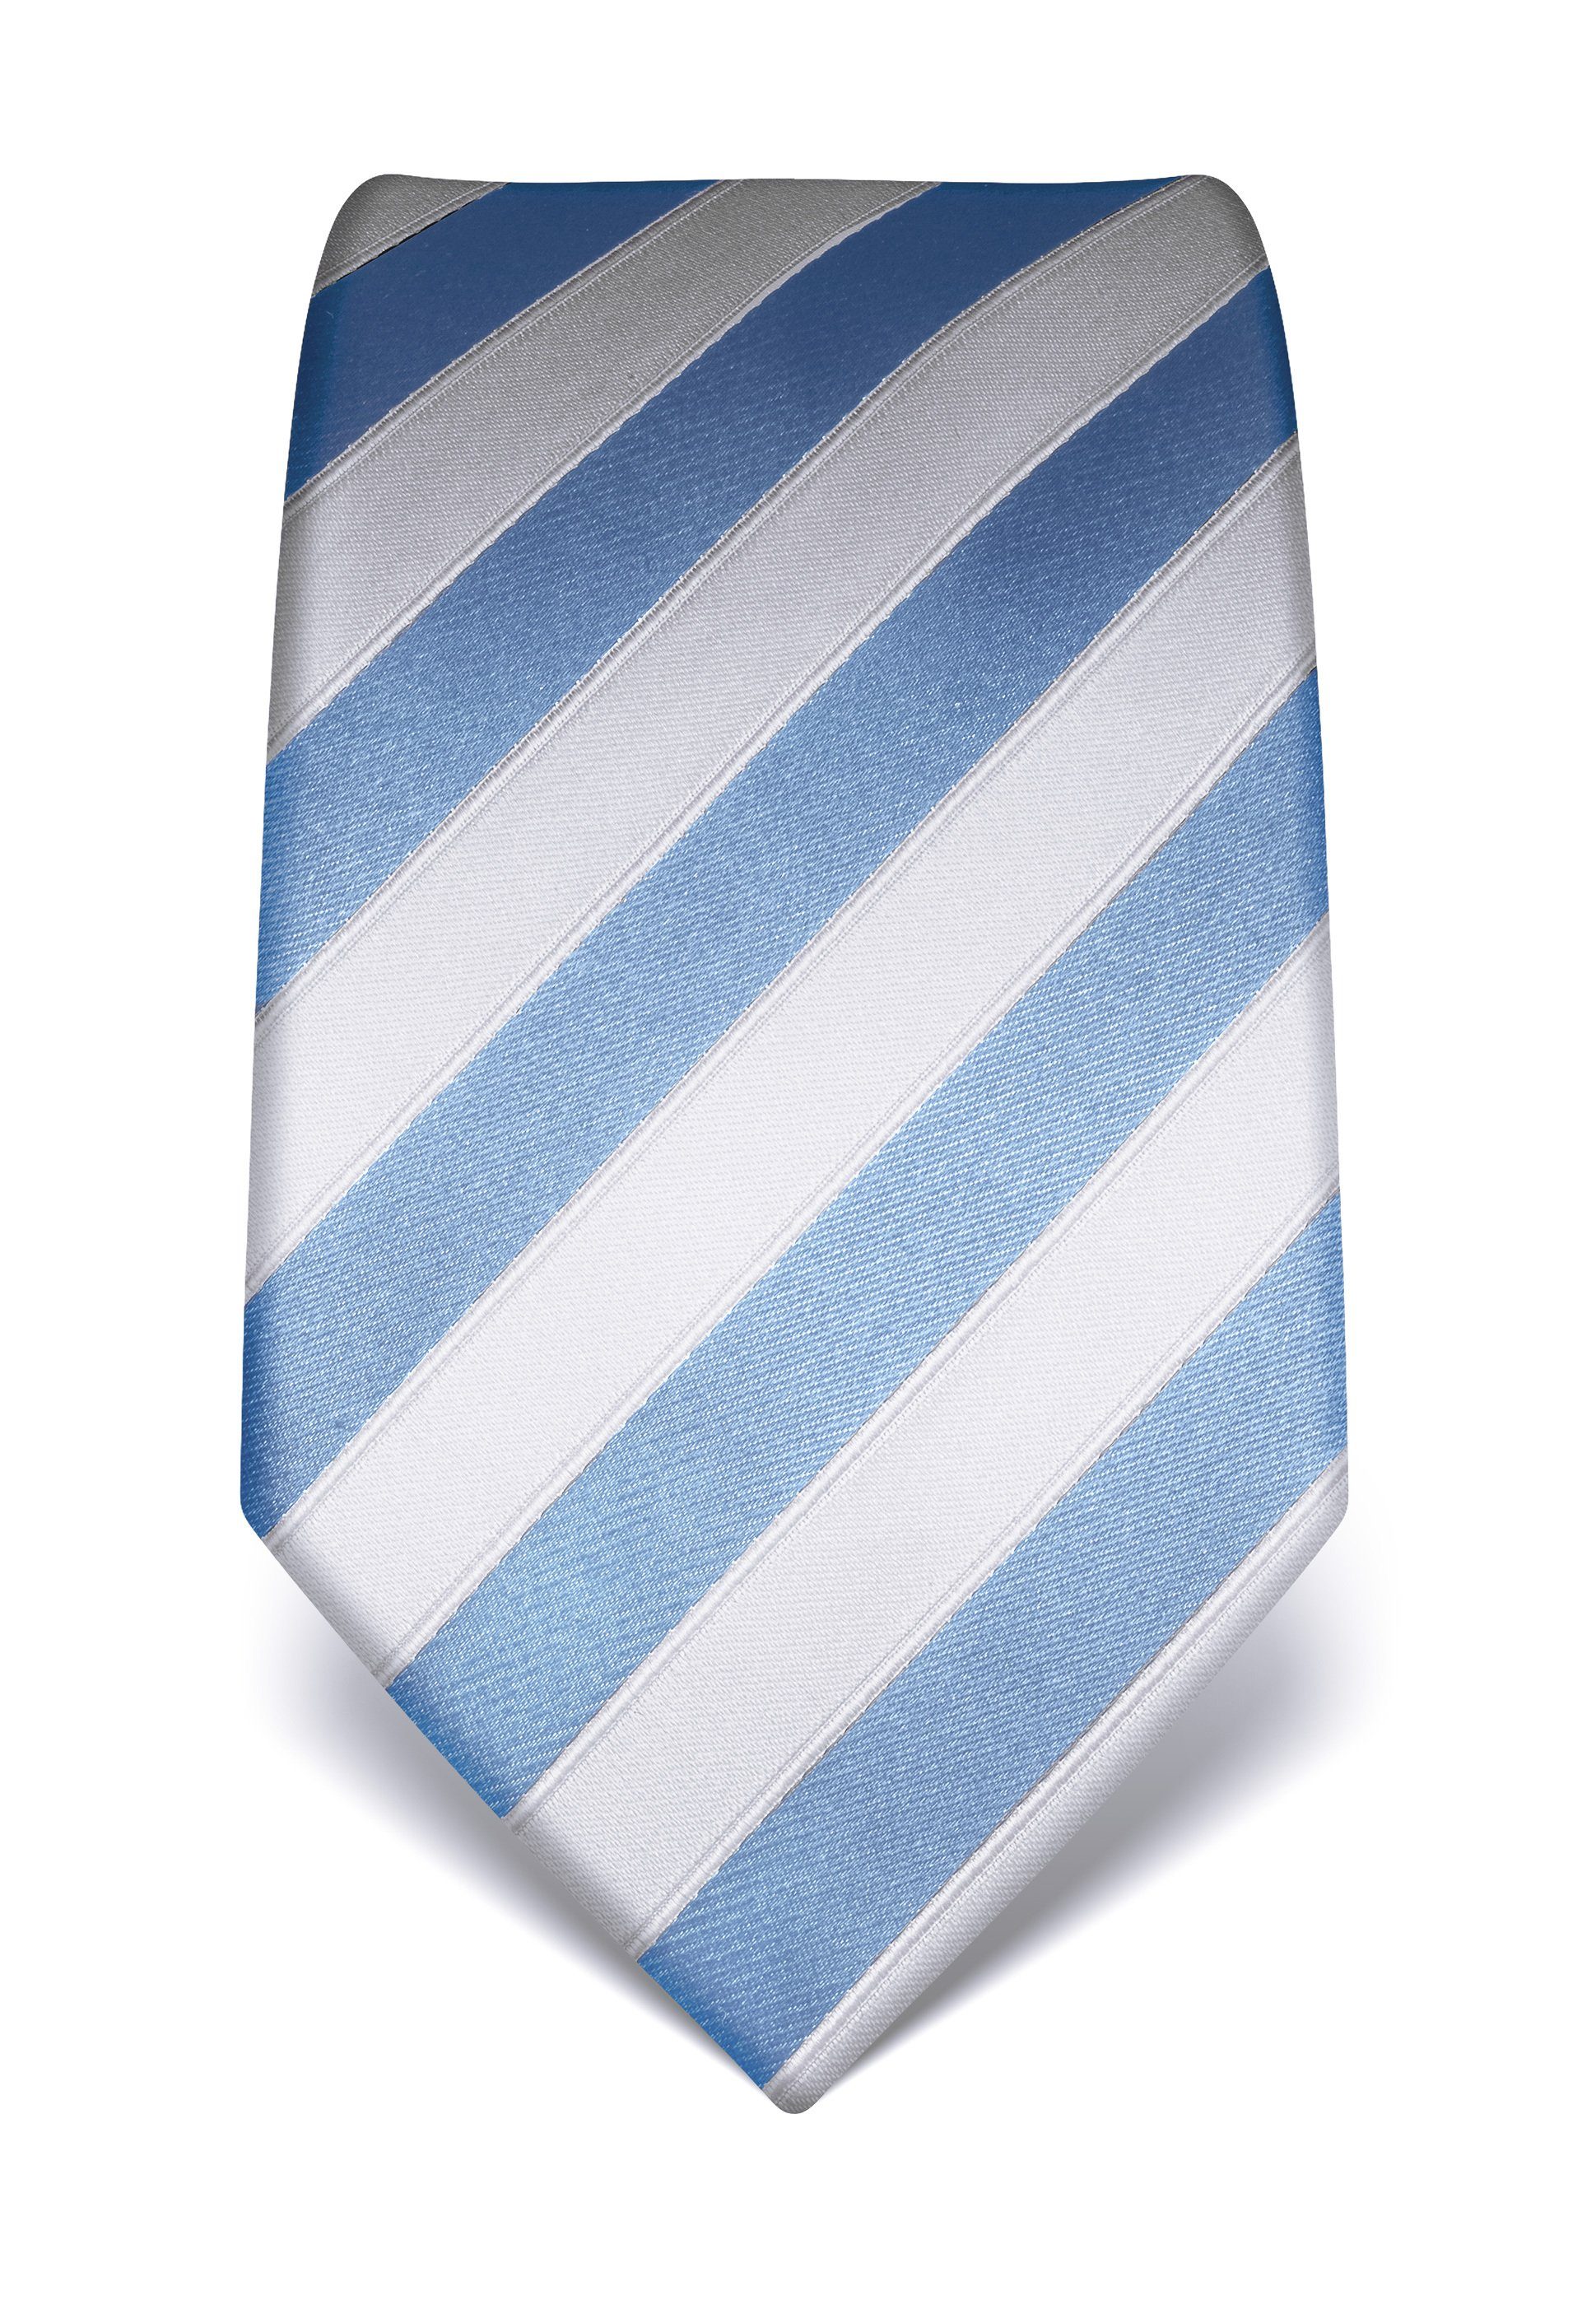 Vincenzo gestreift Boretti blau/weiß Krawatte